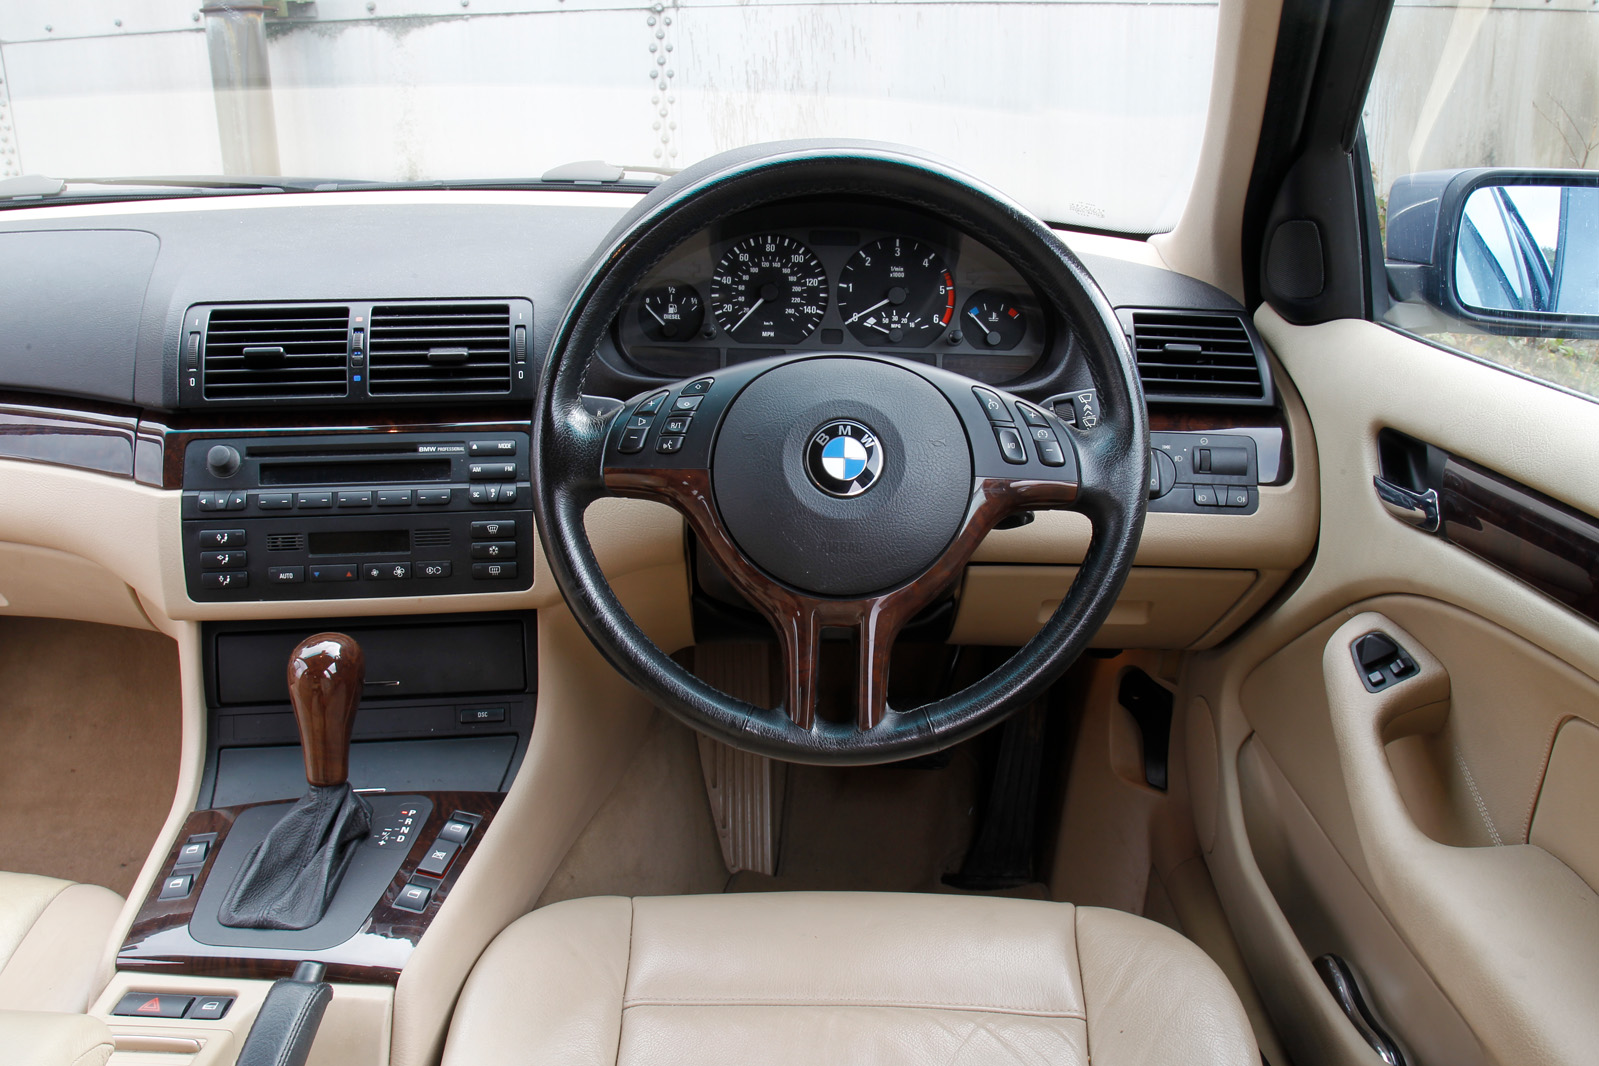 BMW 3 series (E46)